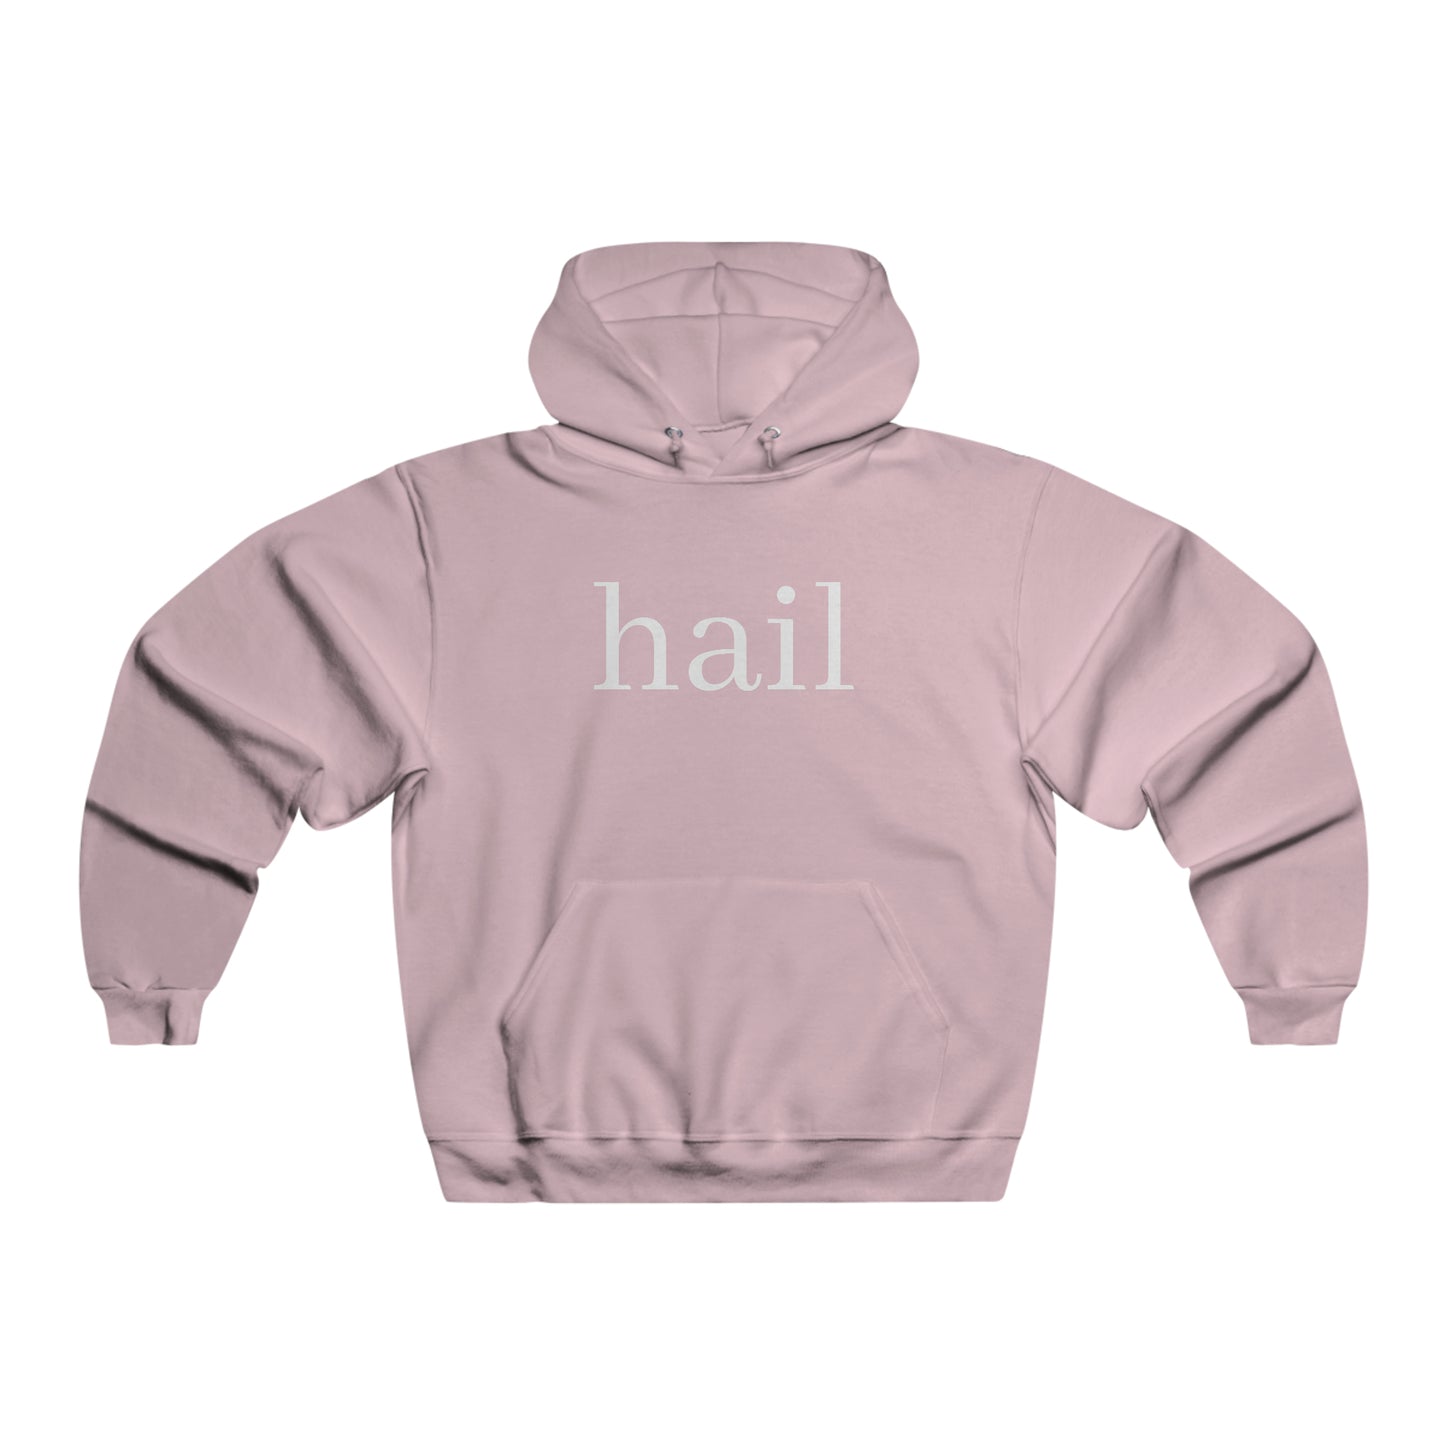 "hail" Hooded Sweatshirt